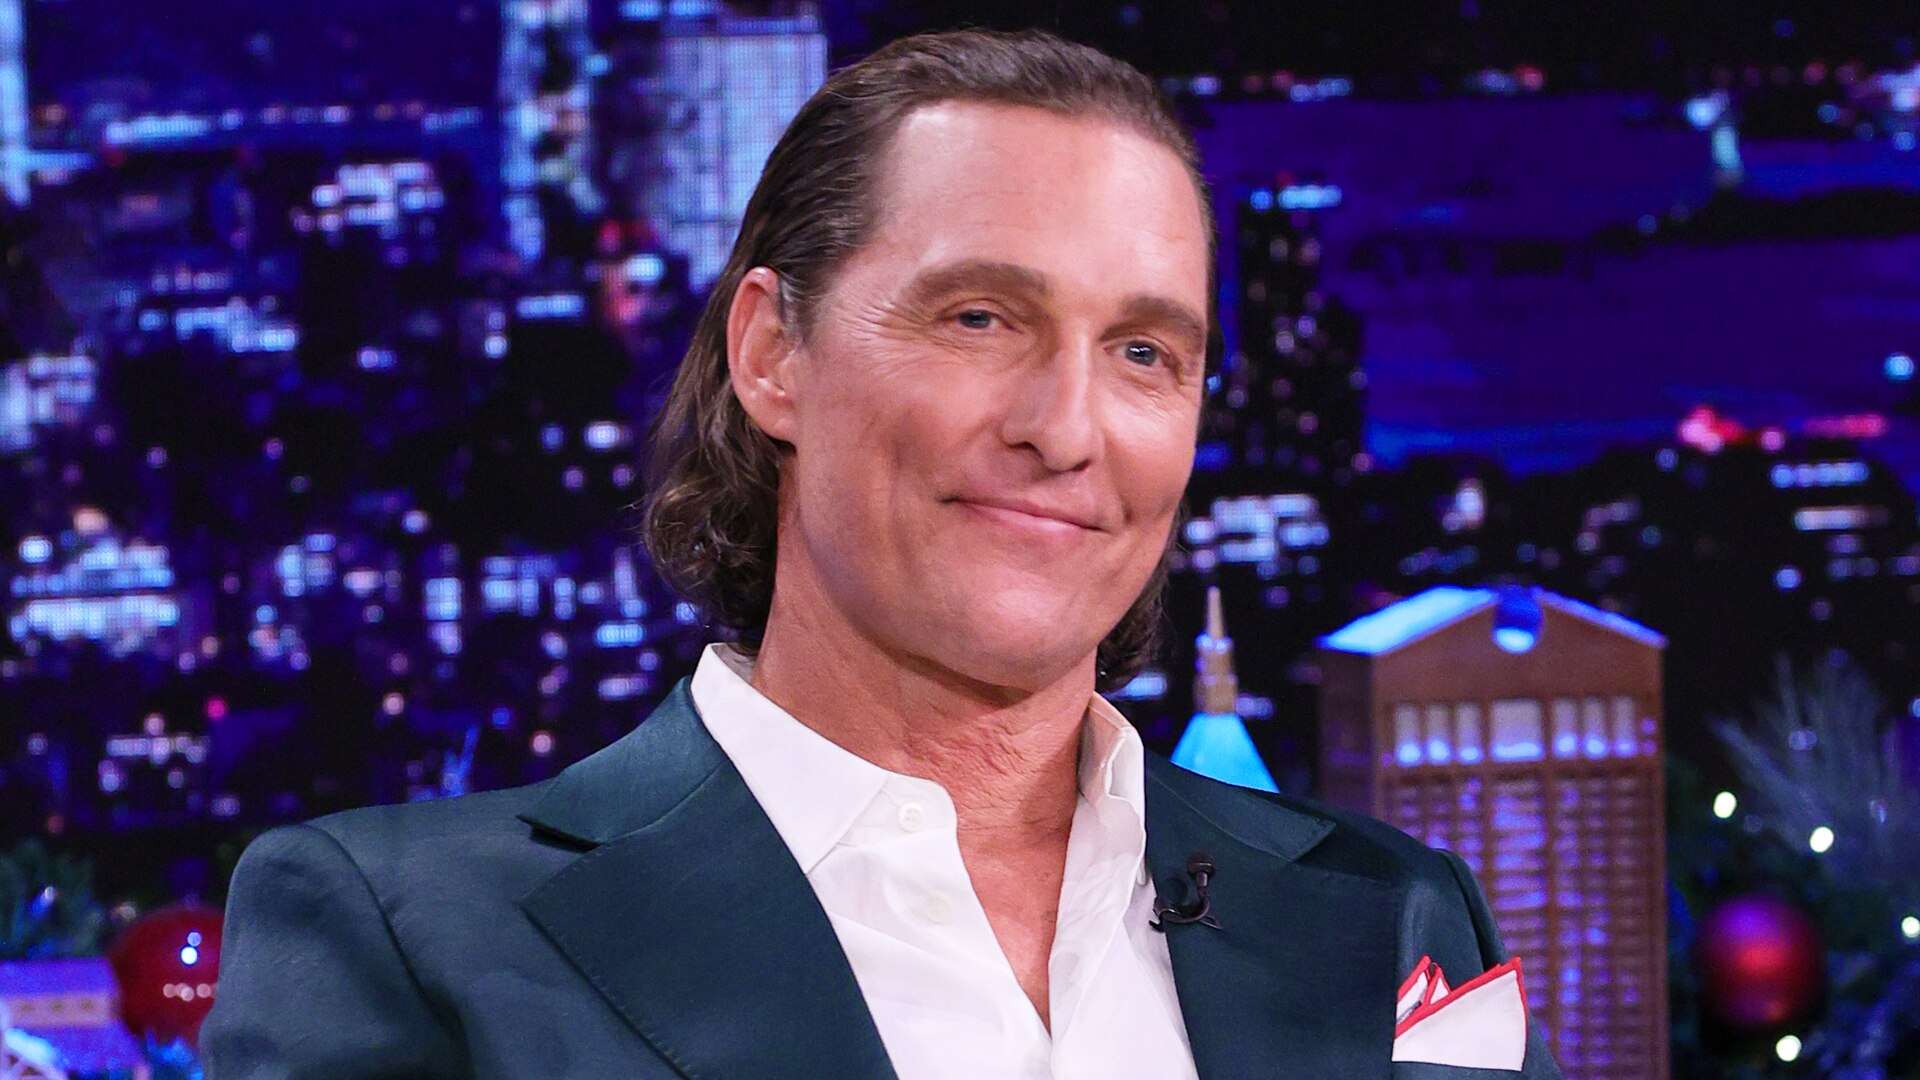 Matthew McConaughey's Got the Tonight Show's Tight Pants On